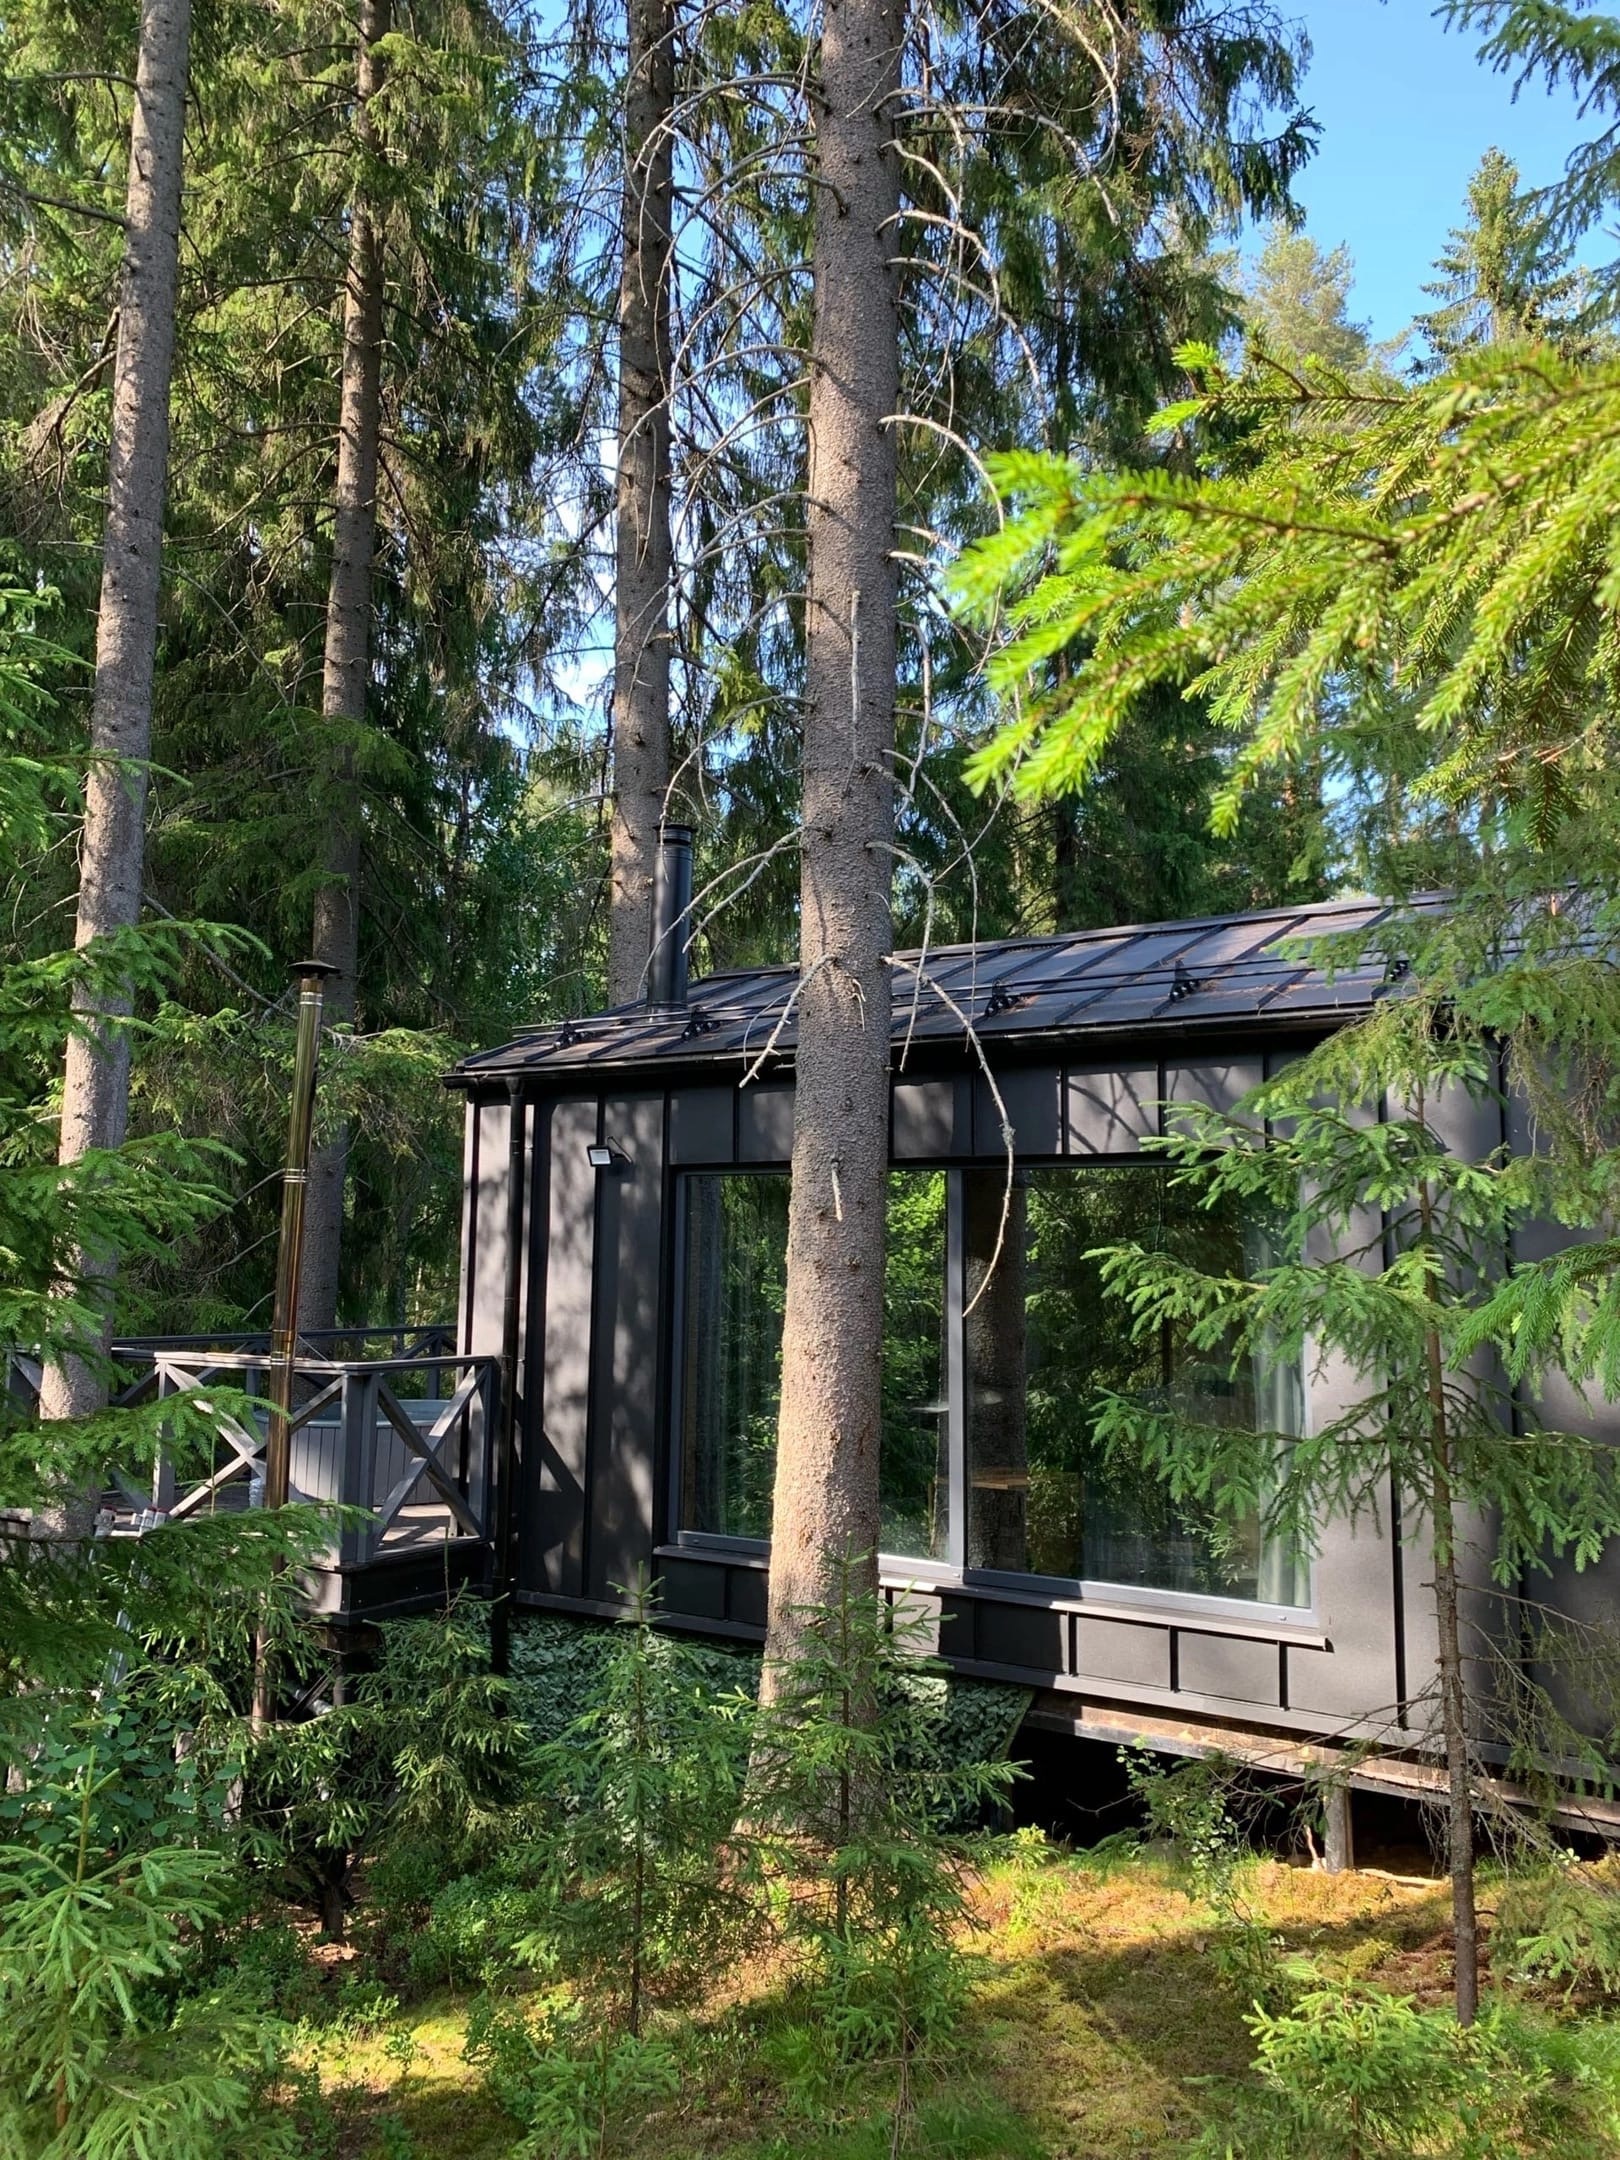 Anttila hutor